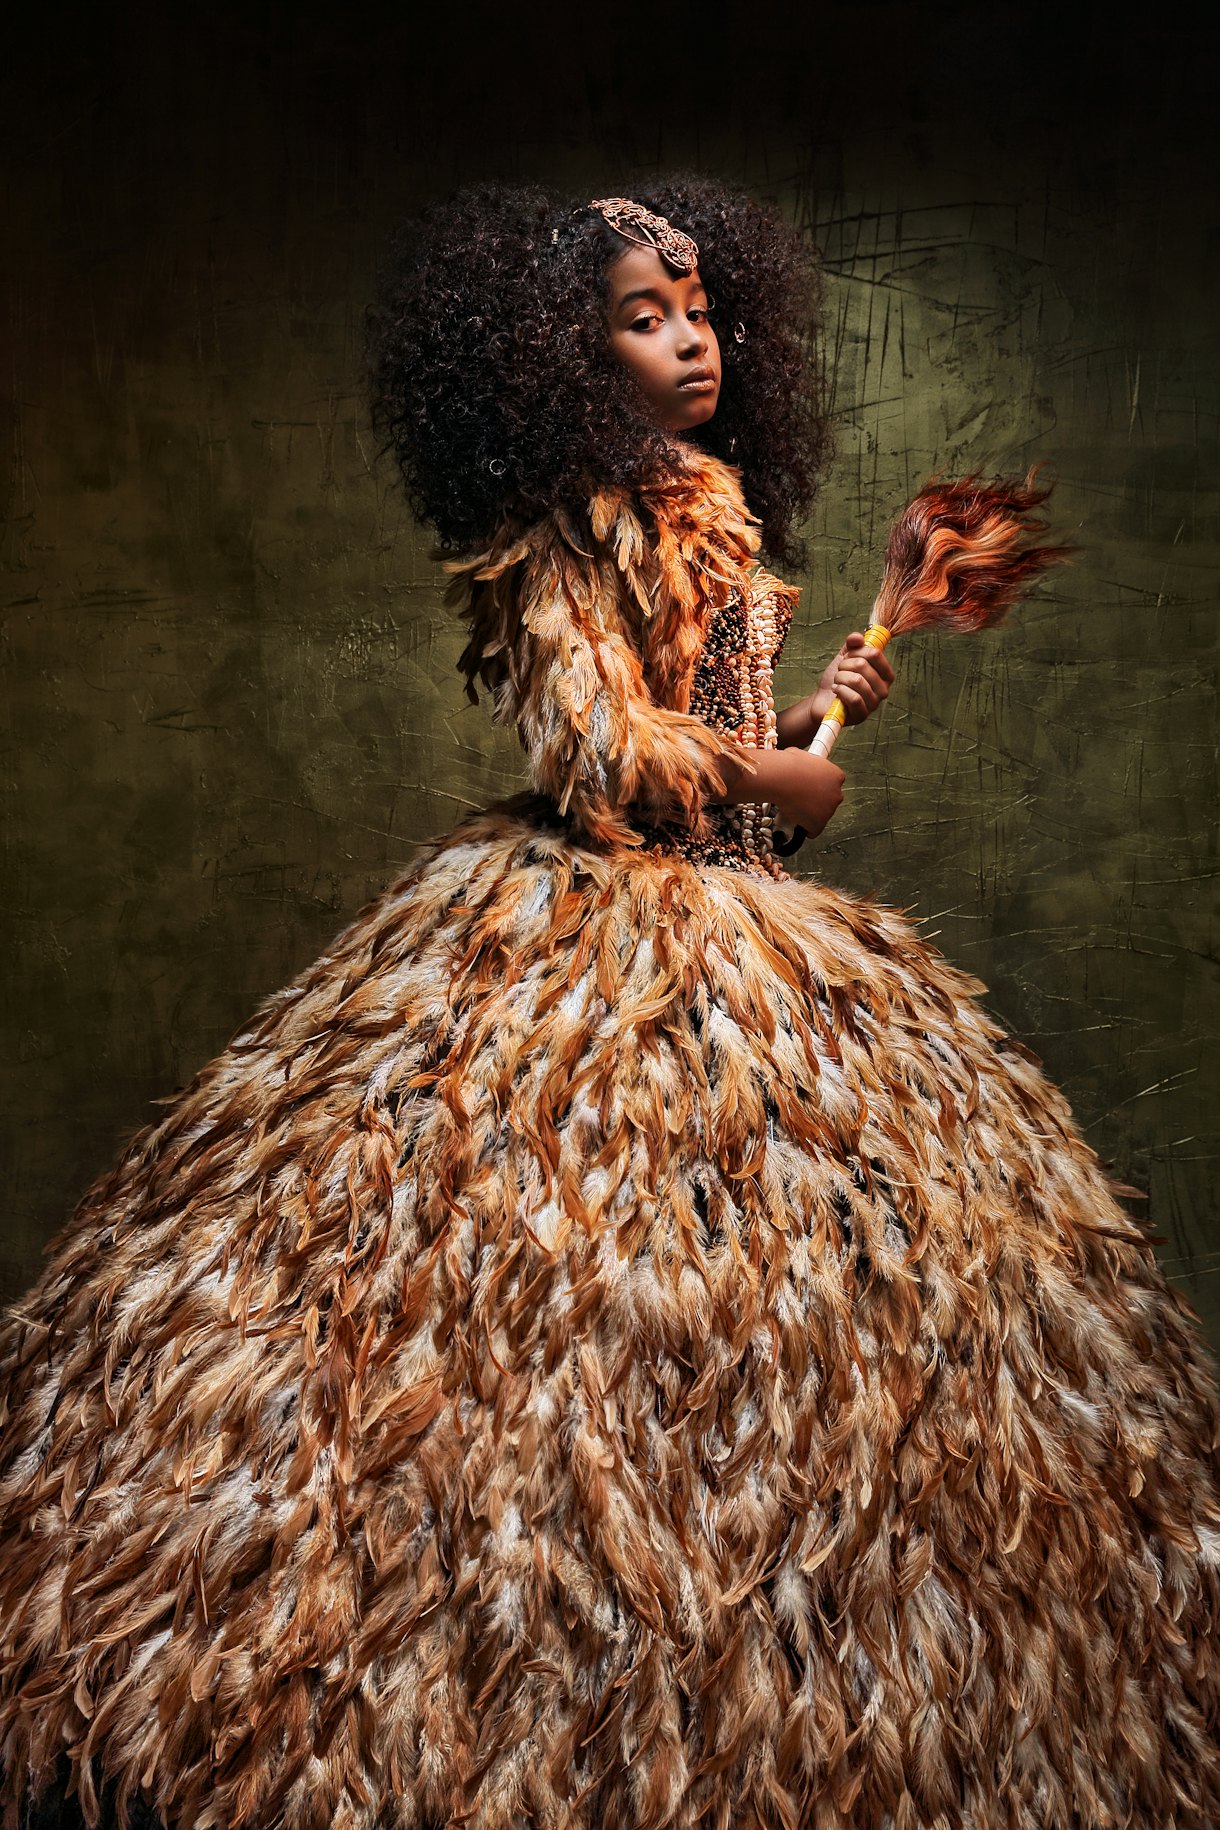 Stunning African American Princess Photo Series Celebrates Black Girl Magic 